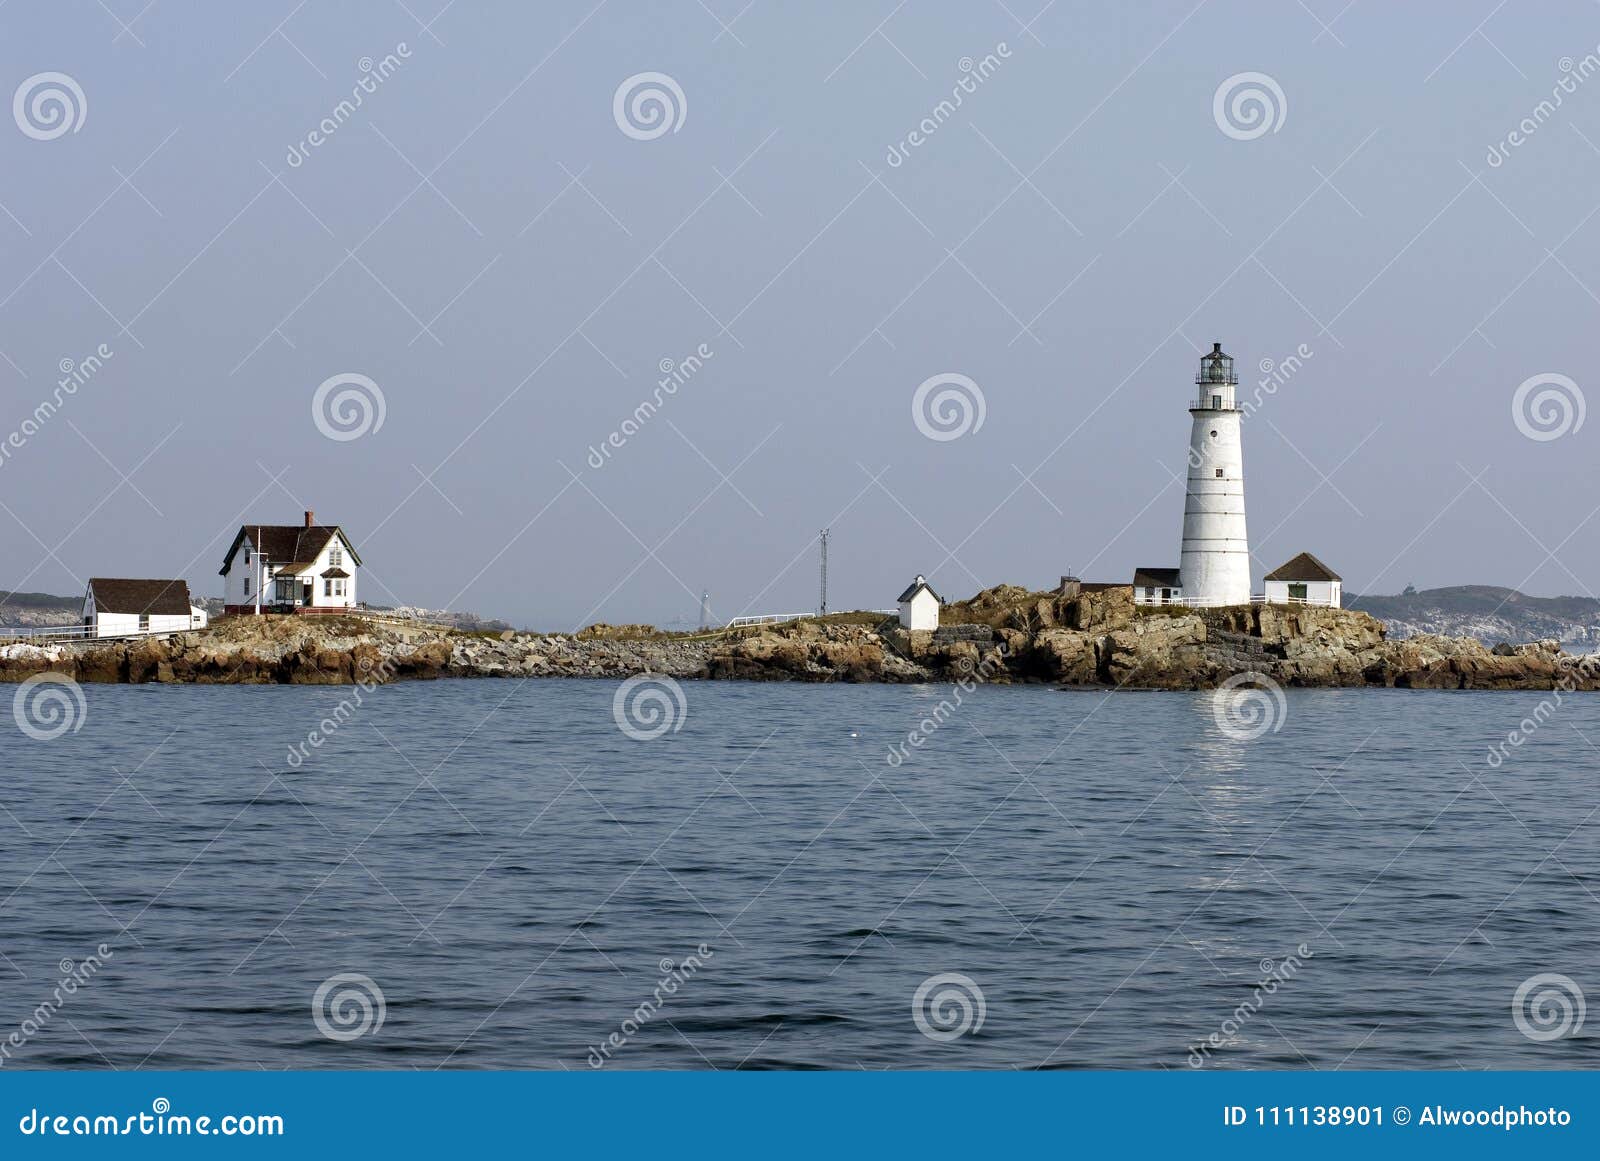 boston harbor lighthouse on little brewster island